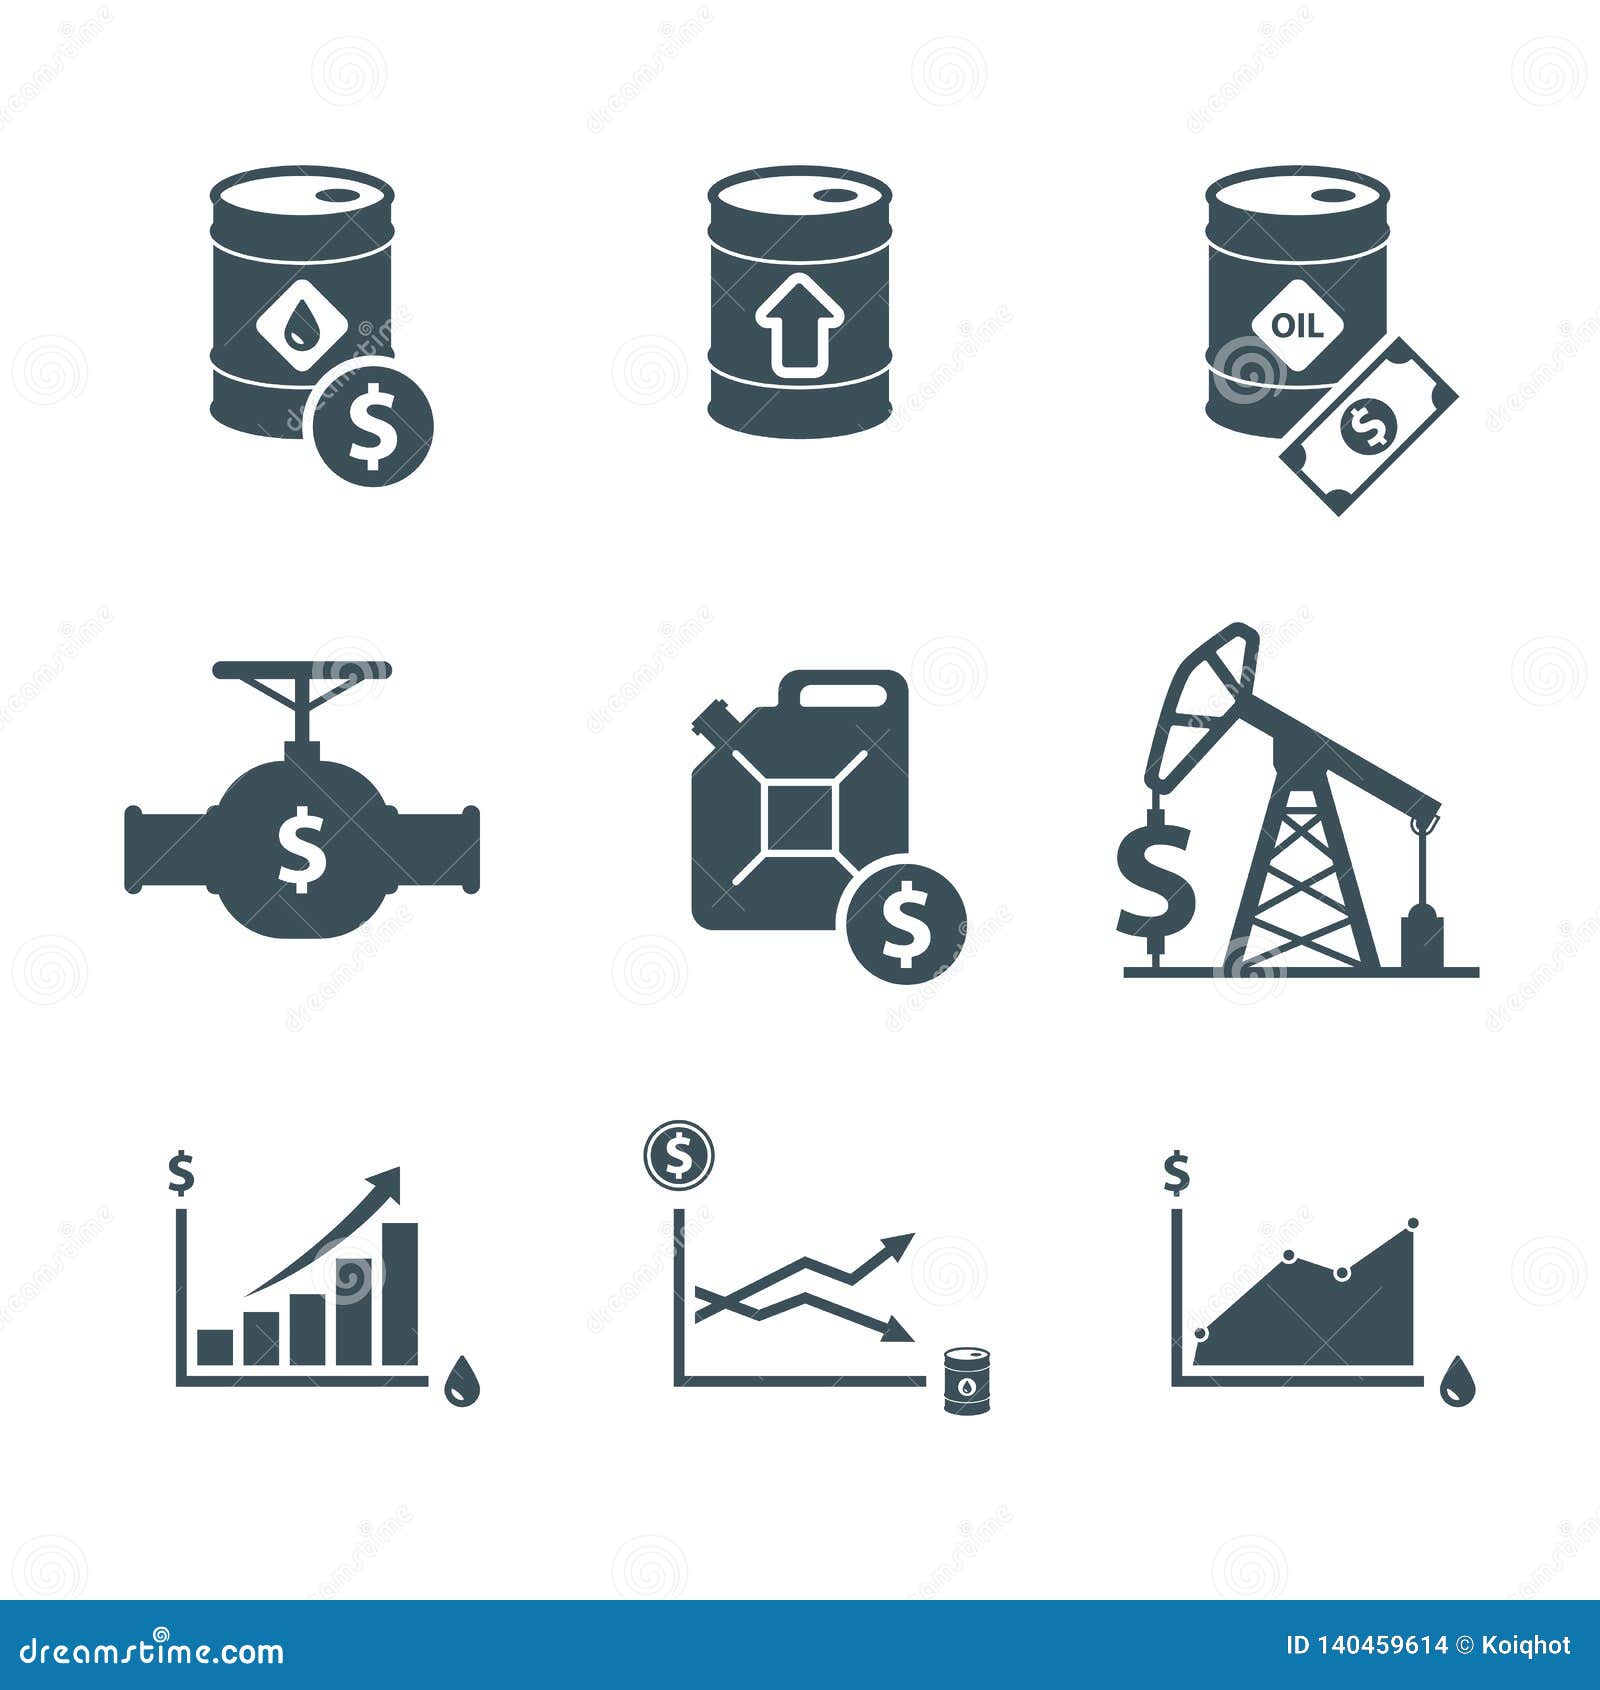 oil commodity price icons set